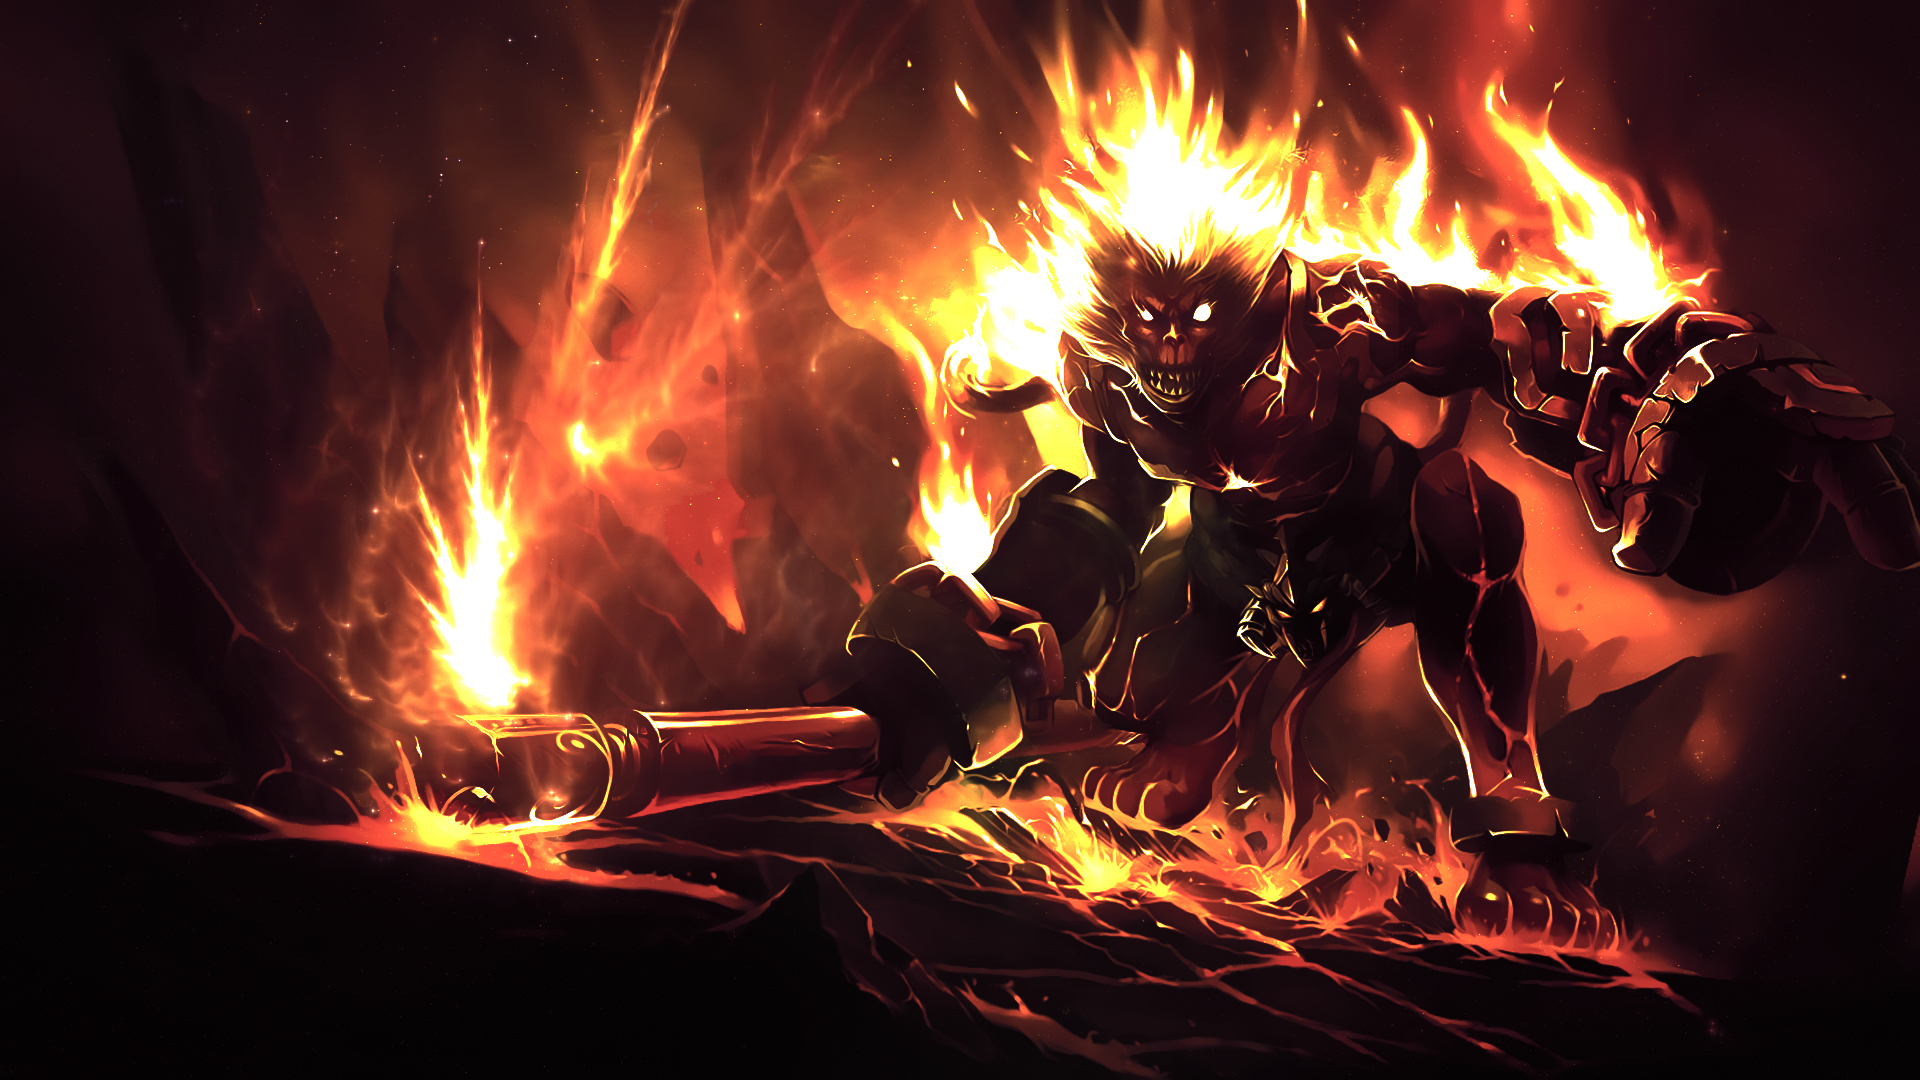 Volcanic Wukong Wallpaper From League Of Legends Gamepressurecom